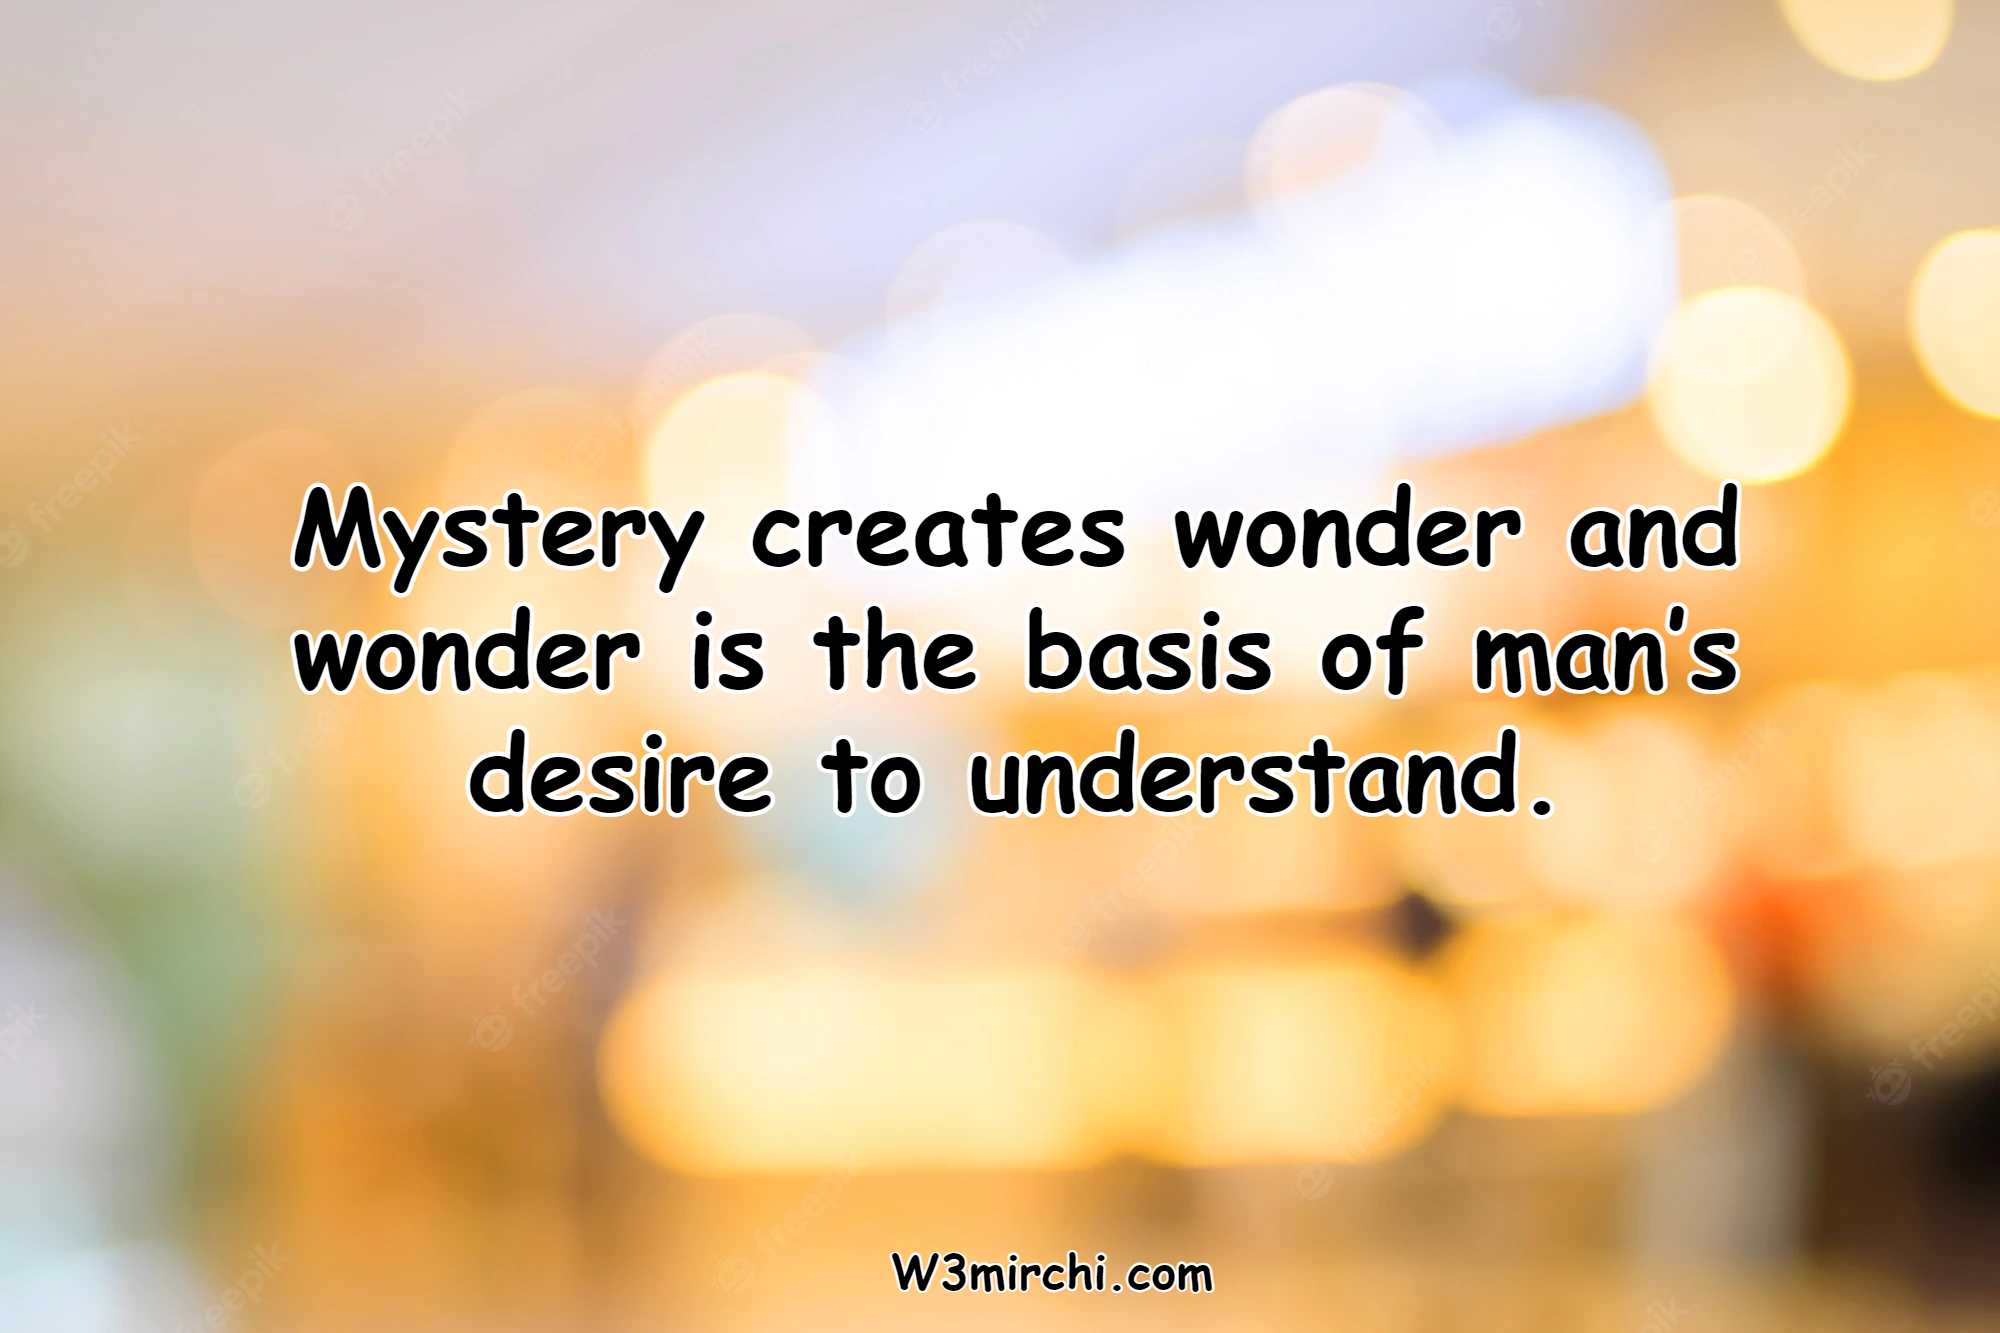 Mystery creates wonder and wonder